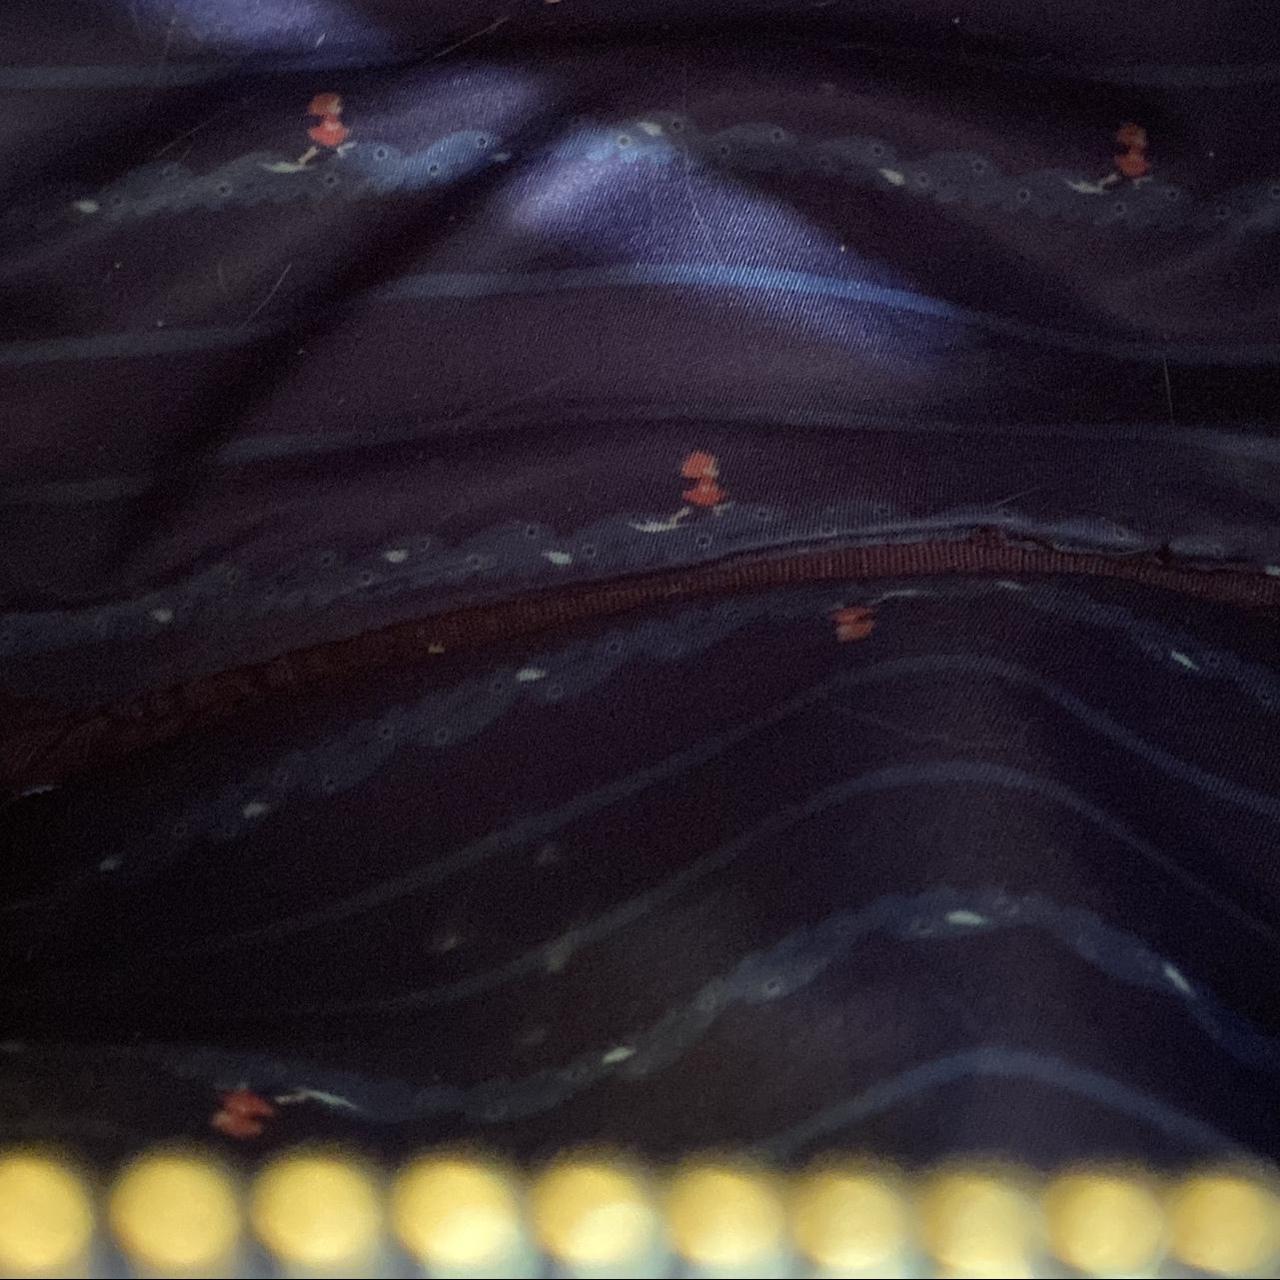 Aurora Sleeping Beauty loungefly backpack small flaw - Depop